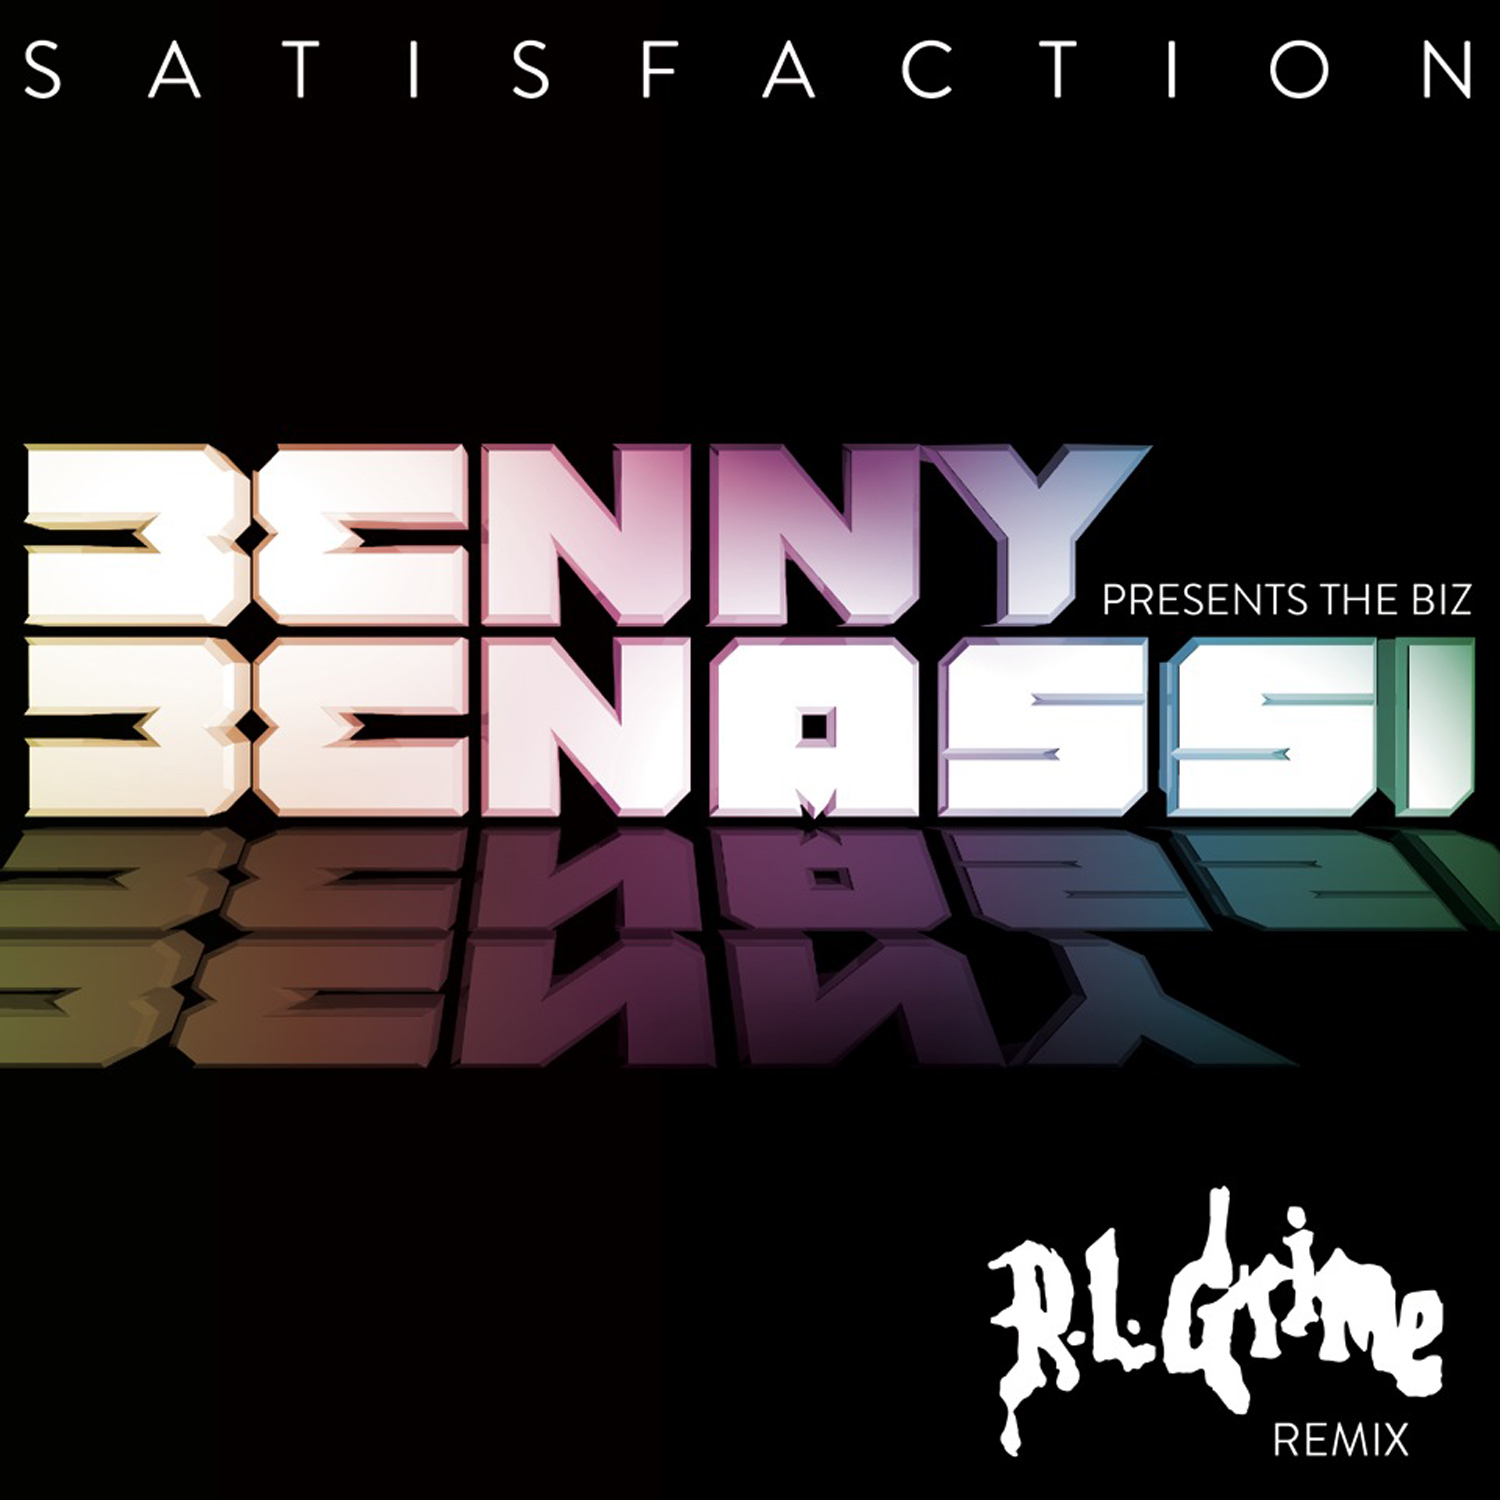 Pobierać Satisfaction (RL Grime Remix) - Benny Benassi (Preview)